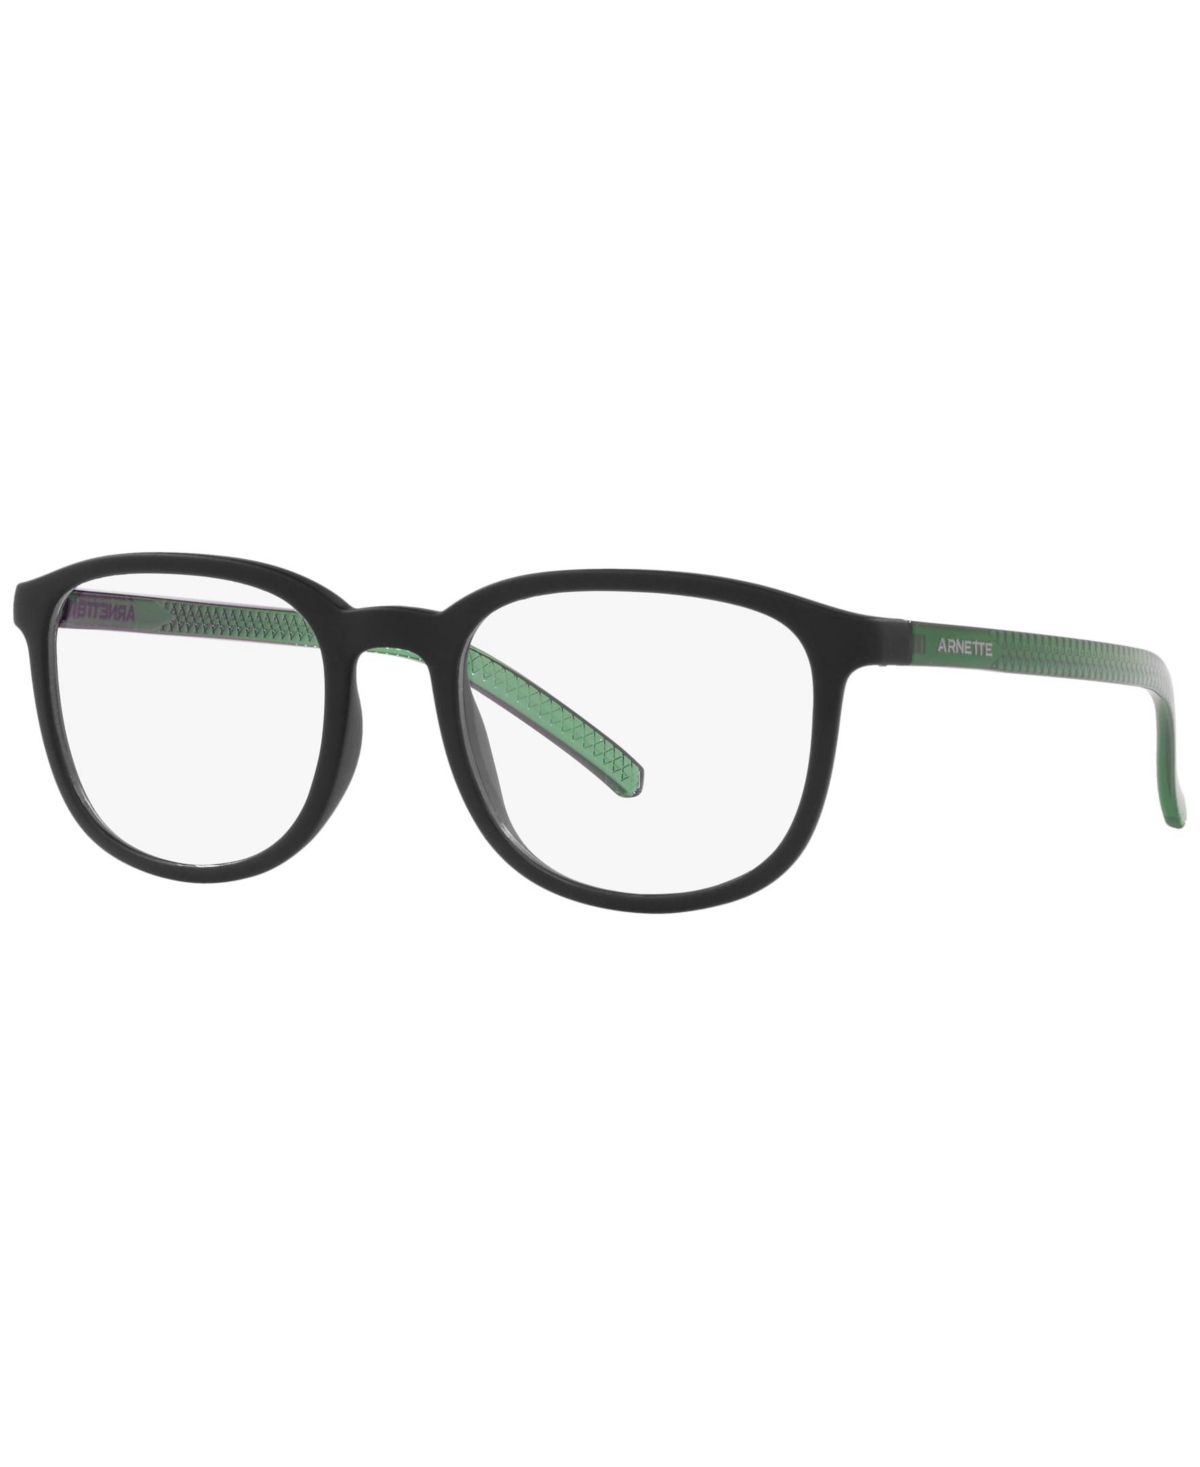 Karibou Men's Oval Eyeglasses, AN718853-o - Matte Black